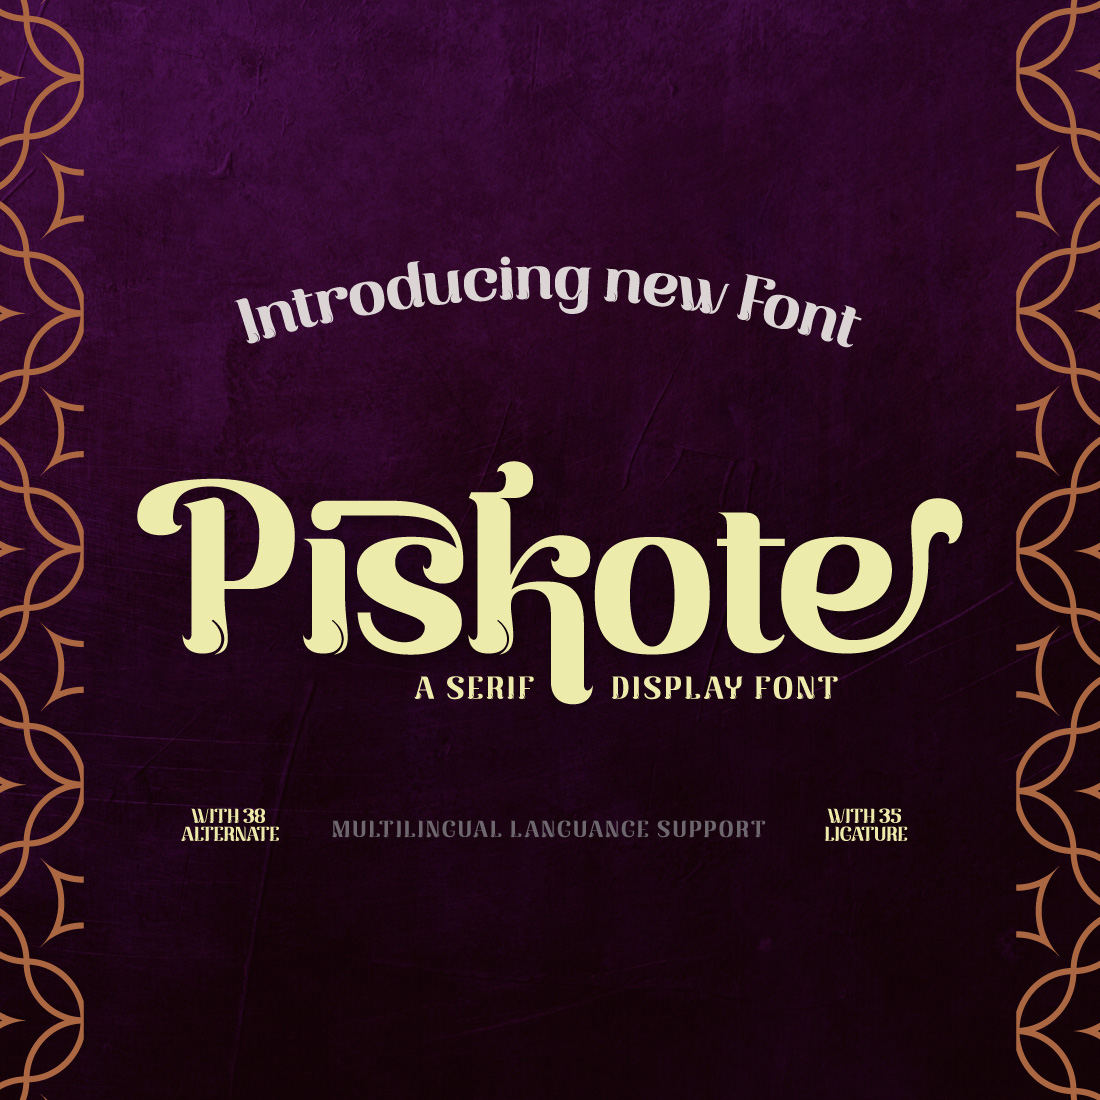 Piskote | Display Font cover image.